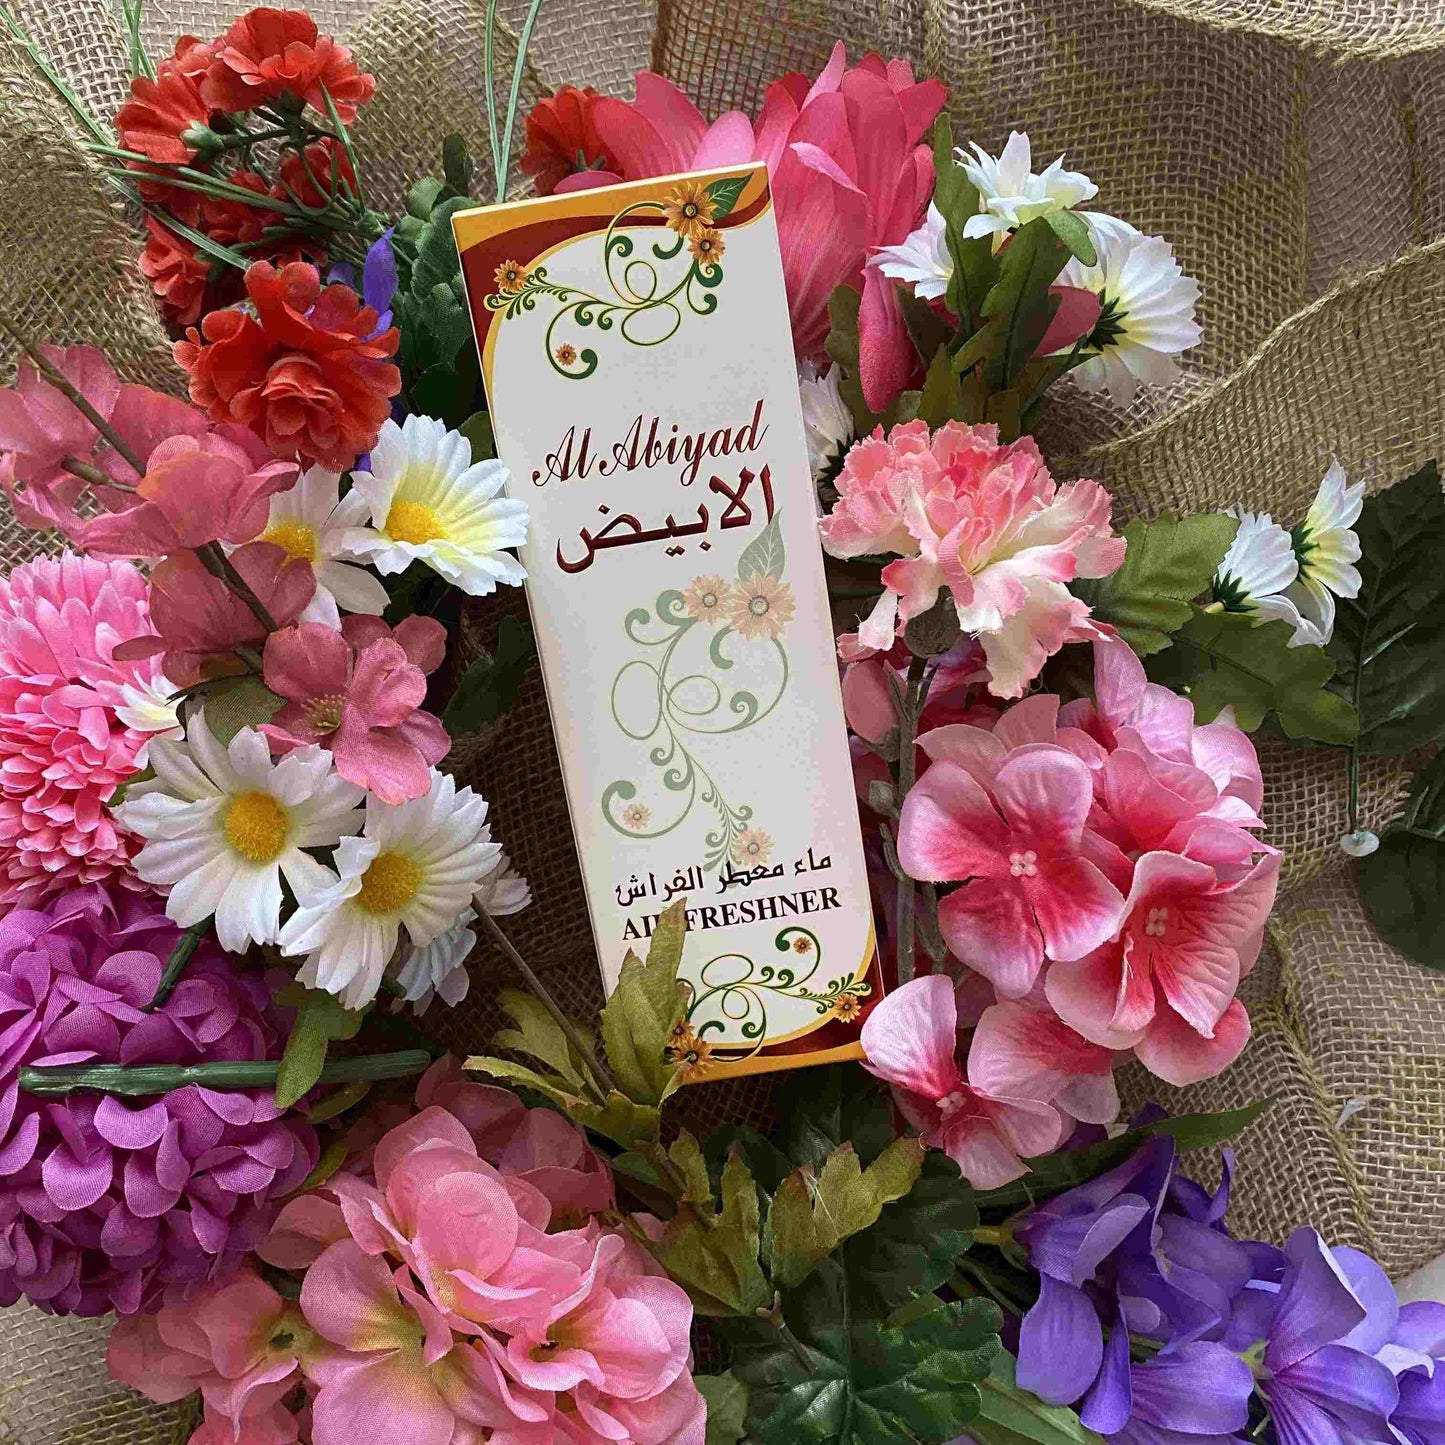 Al Abiyad | Home Air Freshener 250ml - HSA Perfumes